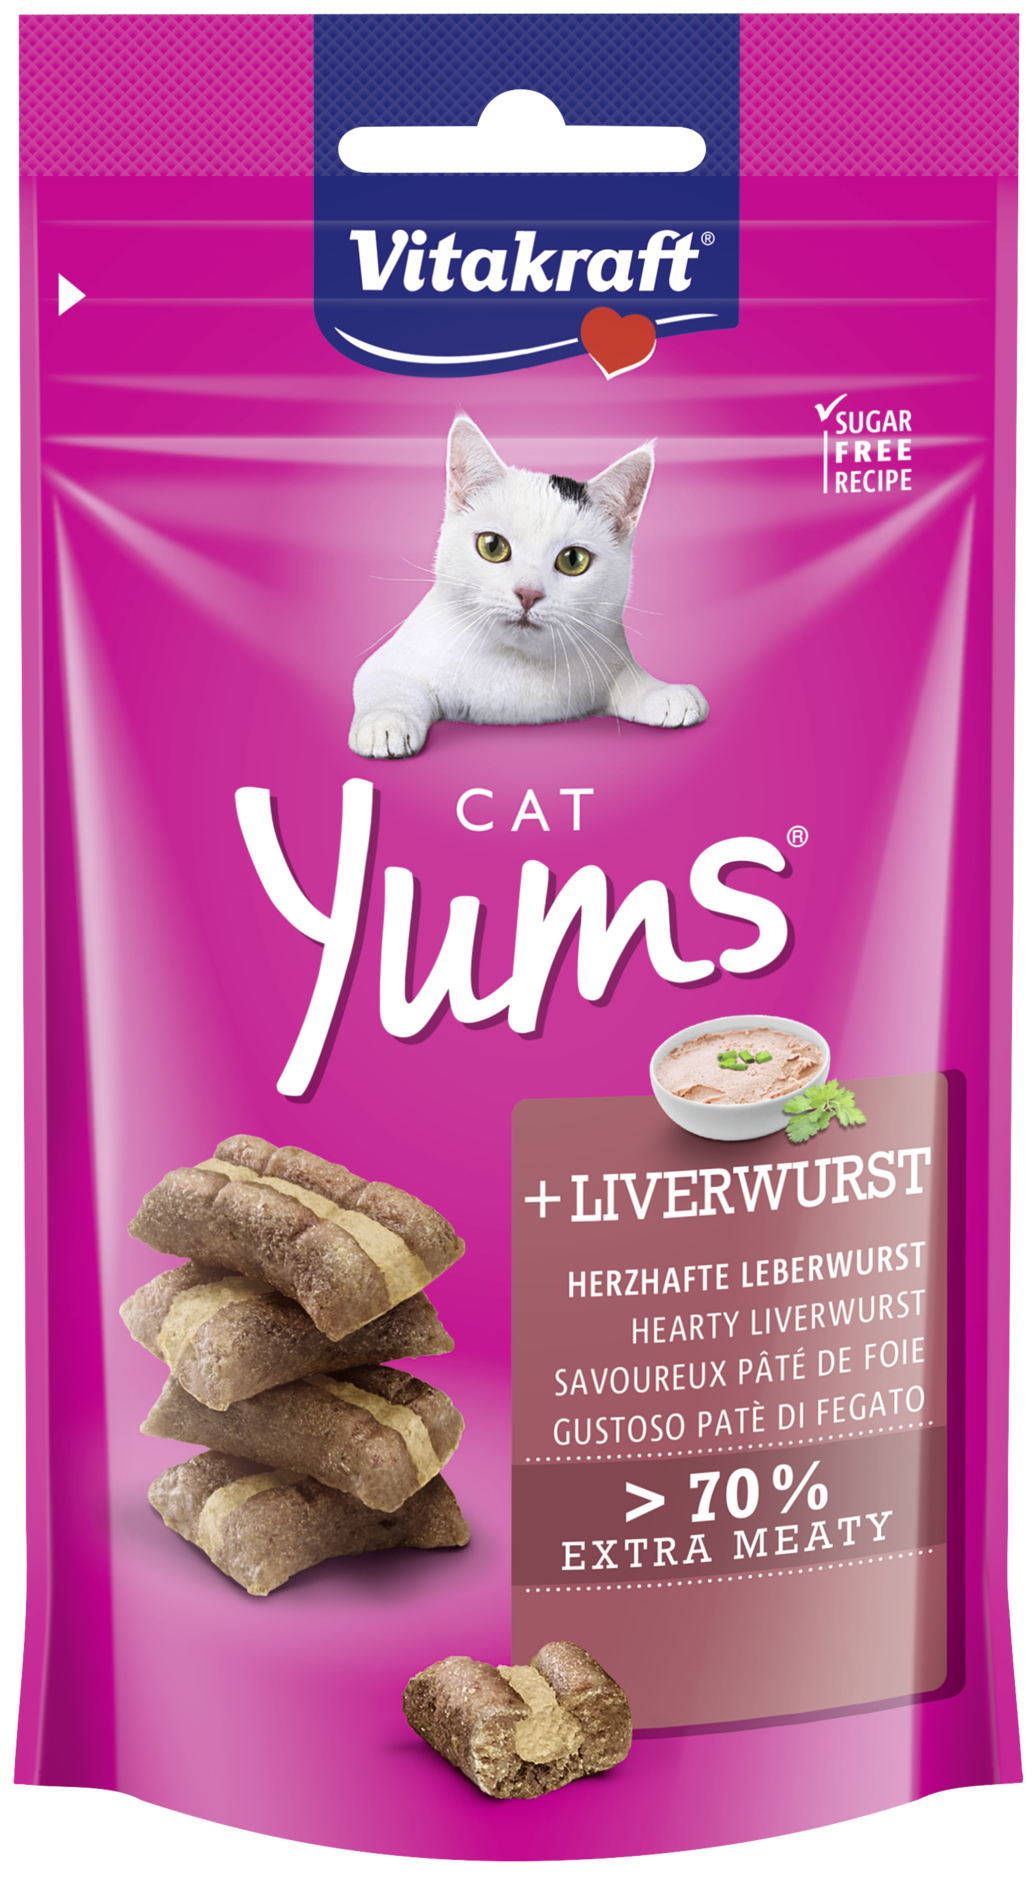 VITAKRAFT Cat Yums - Guloseimas para gatos - vários sabores disponíveis